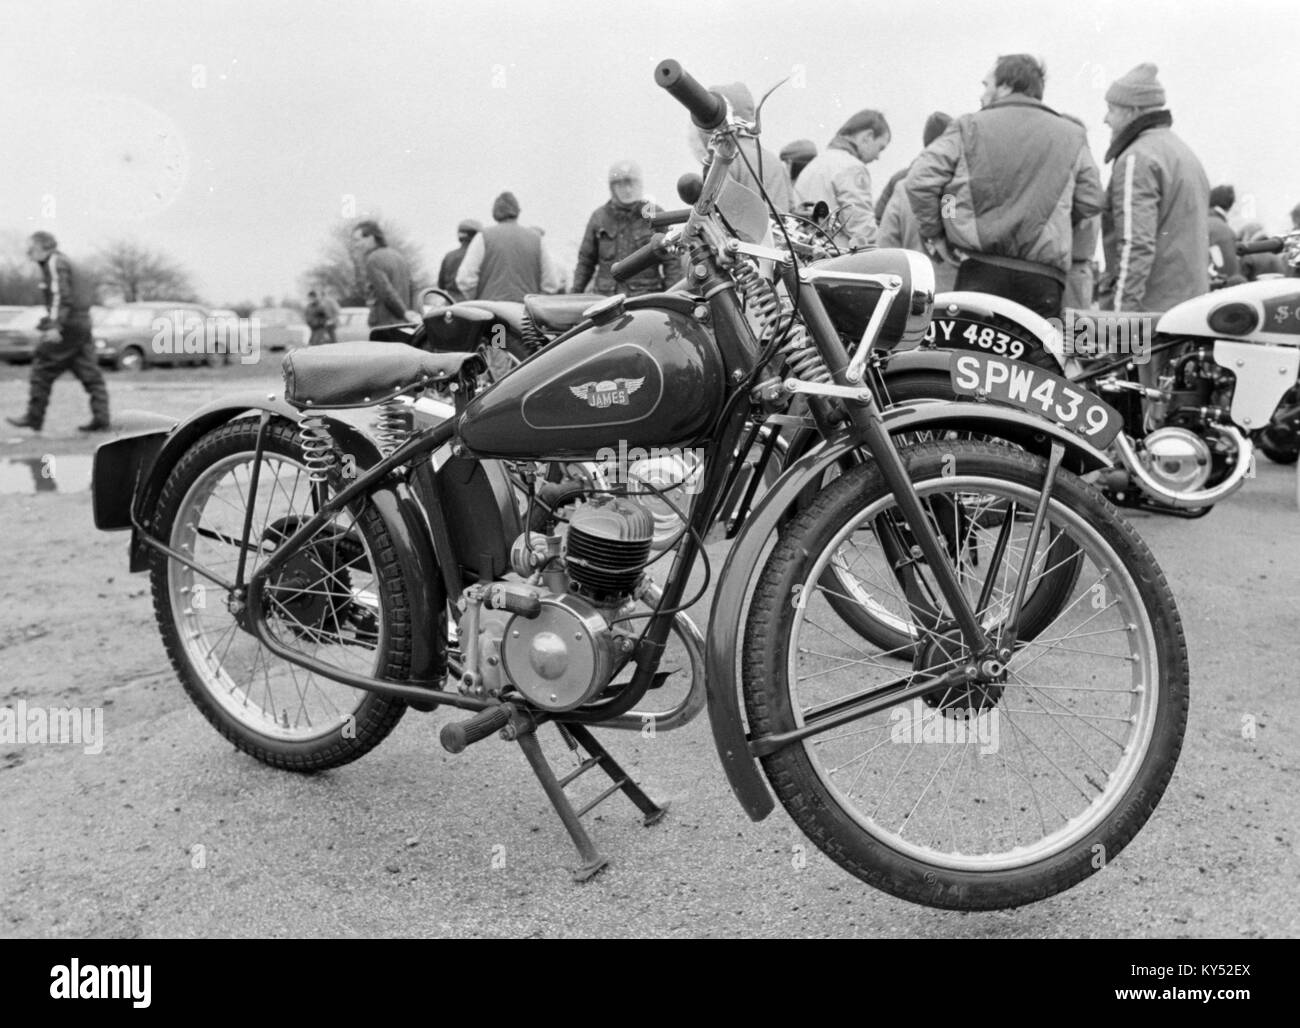 Two stroke James motorcycle, rigid frame Stock Photo